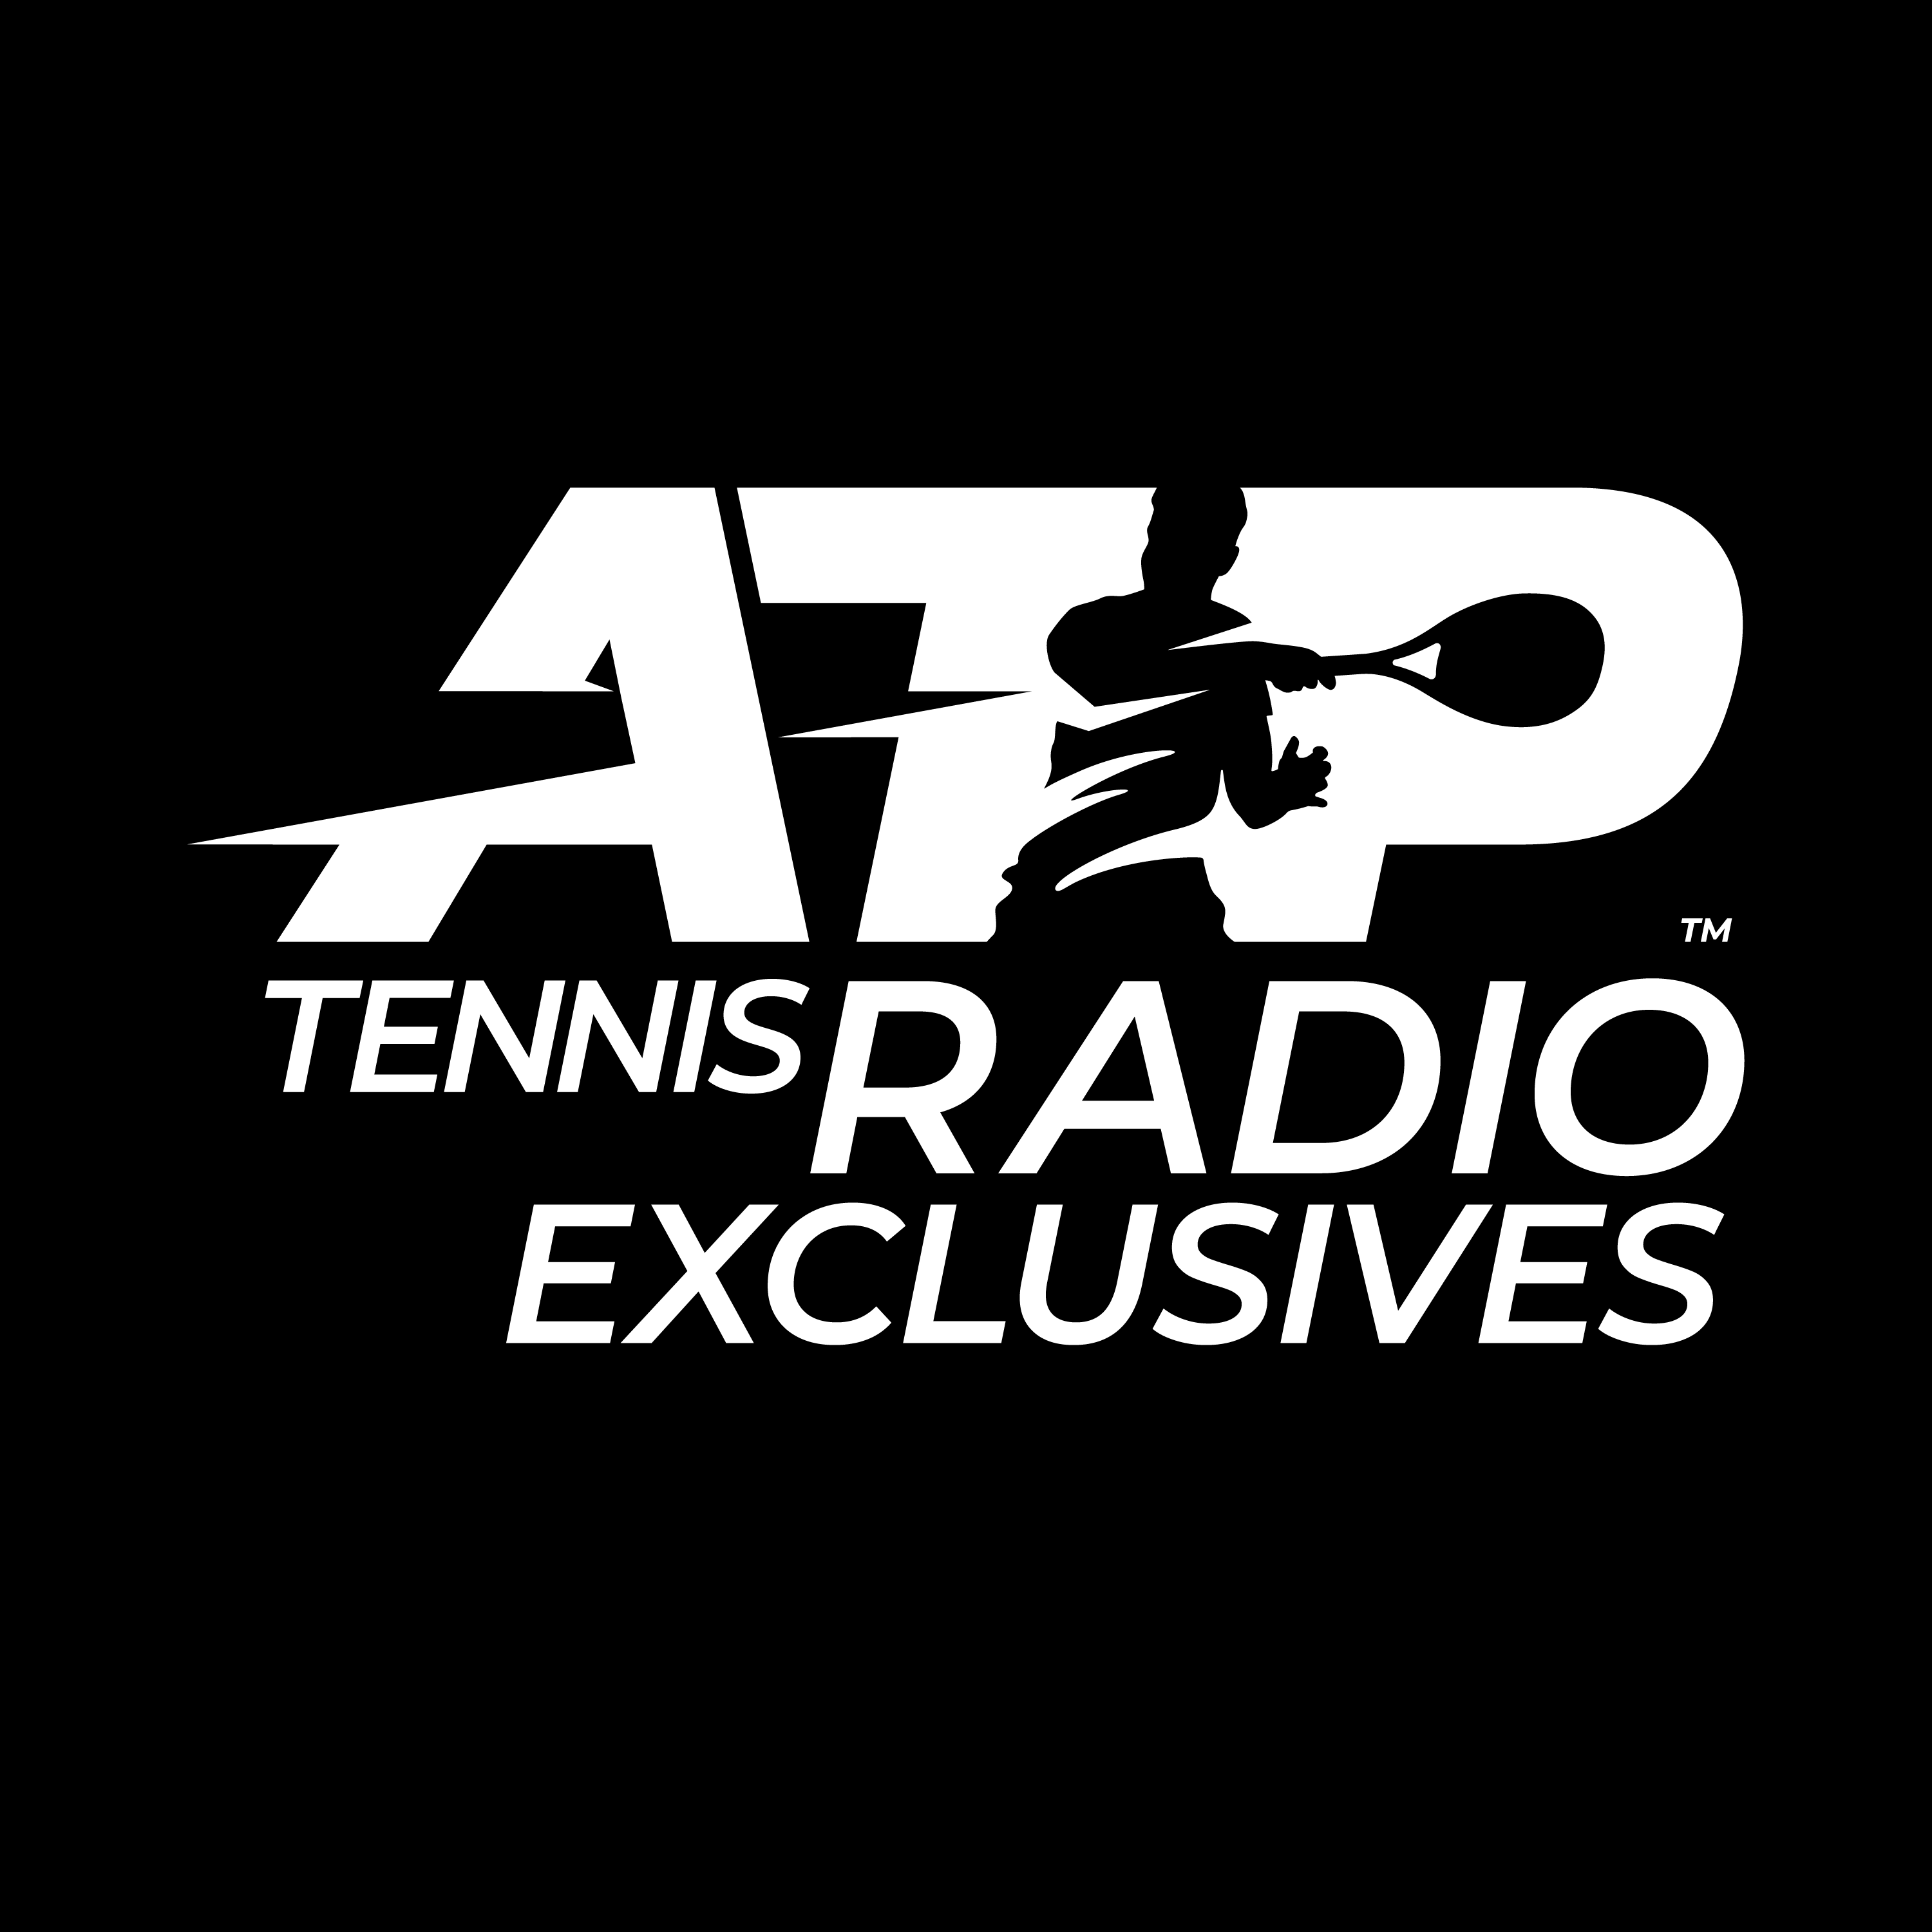 EXCLUSIVE - Horia Tecau On Retiring From Tennis